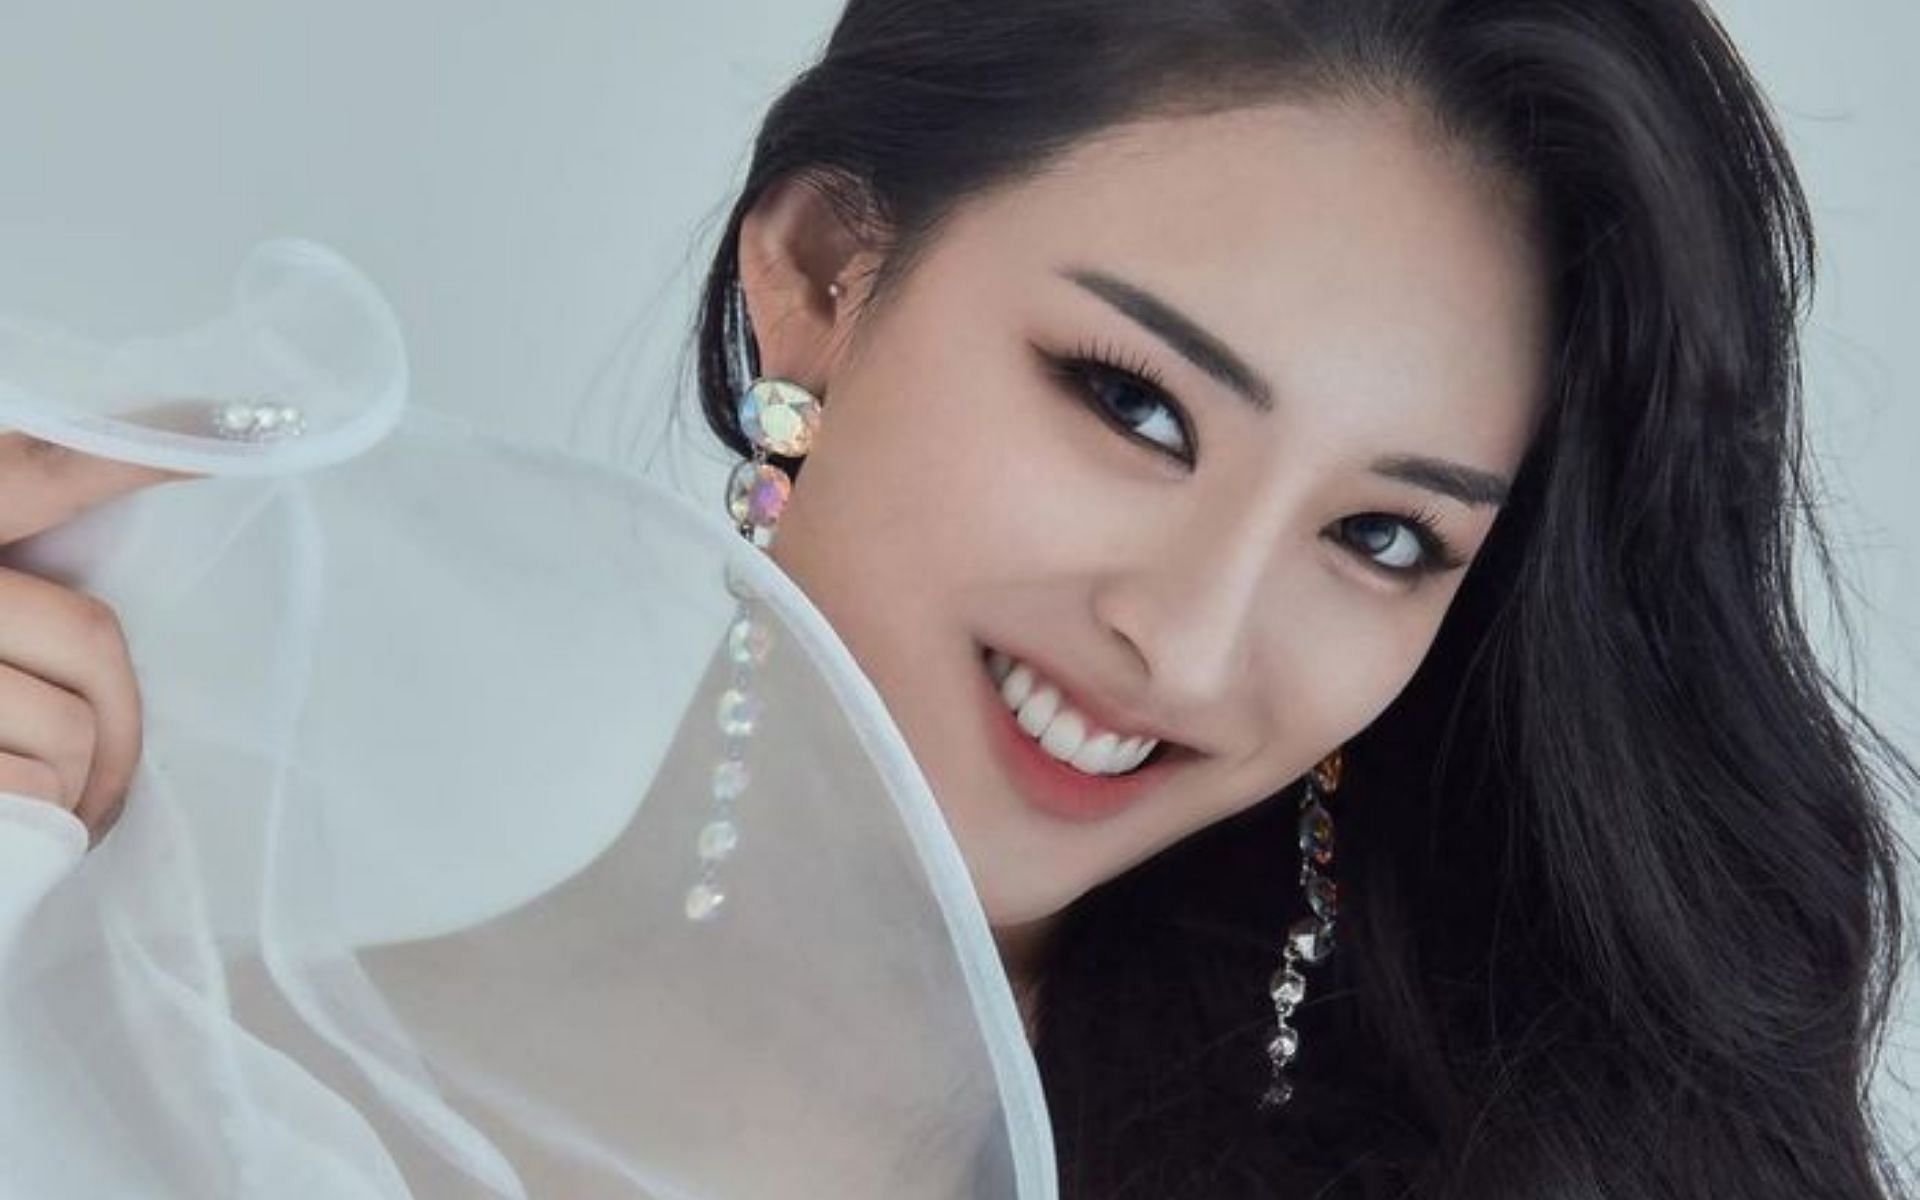 Who is Miss Korea Jisu Kim? The musical actress plays golf as a hobby